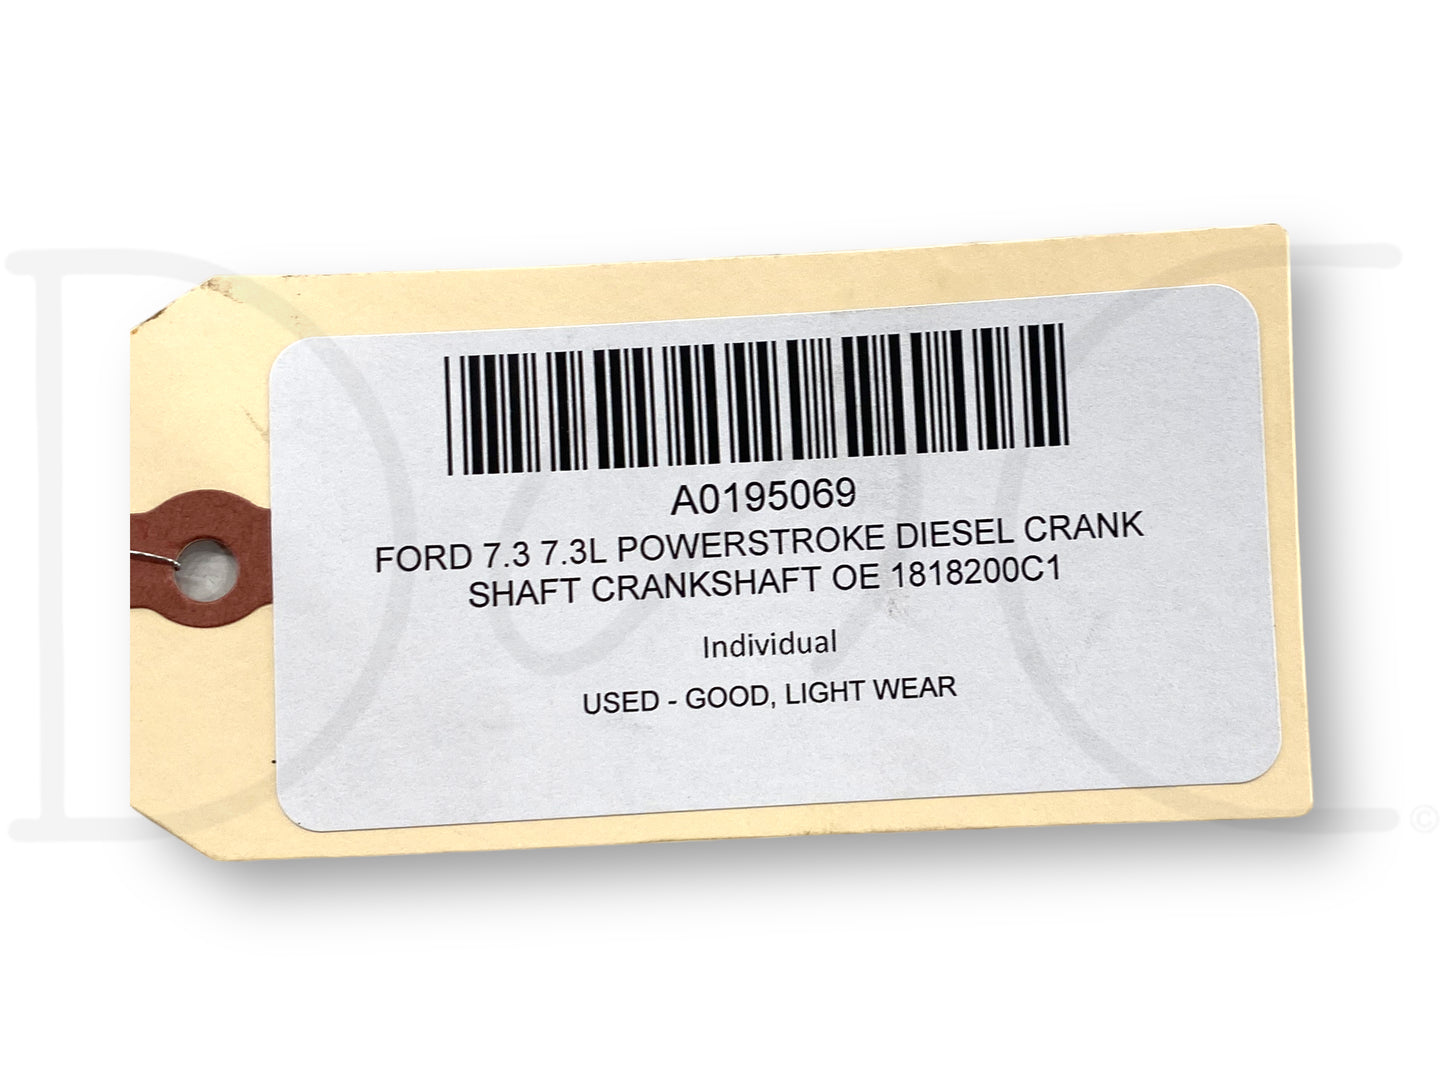 Ford 7.3 7.3L Powerstroke Diesel Crank Shaft Crankshaft OE 1818200C1